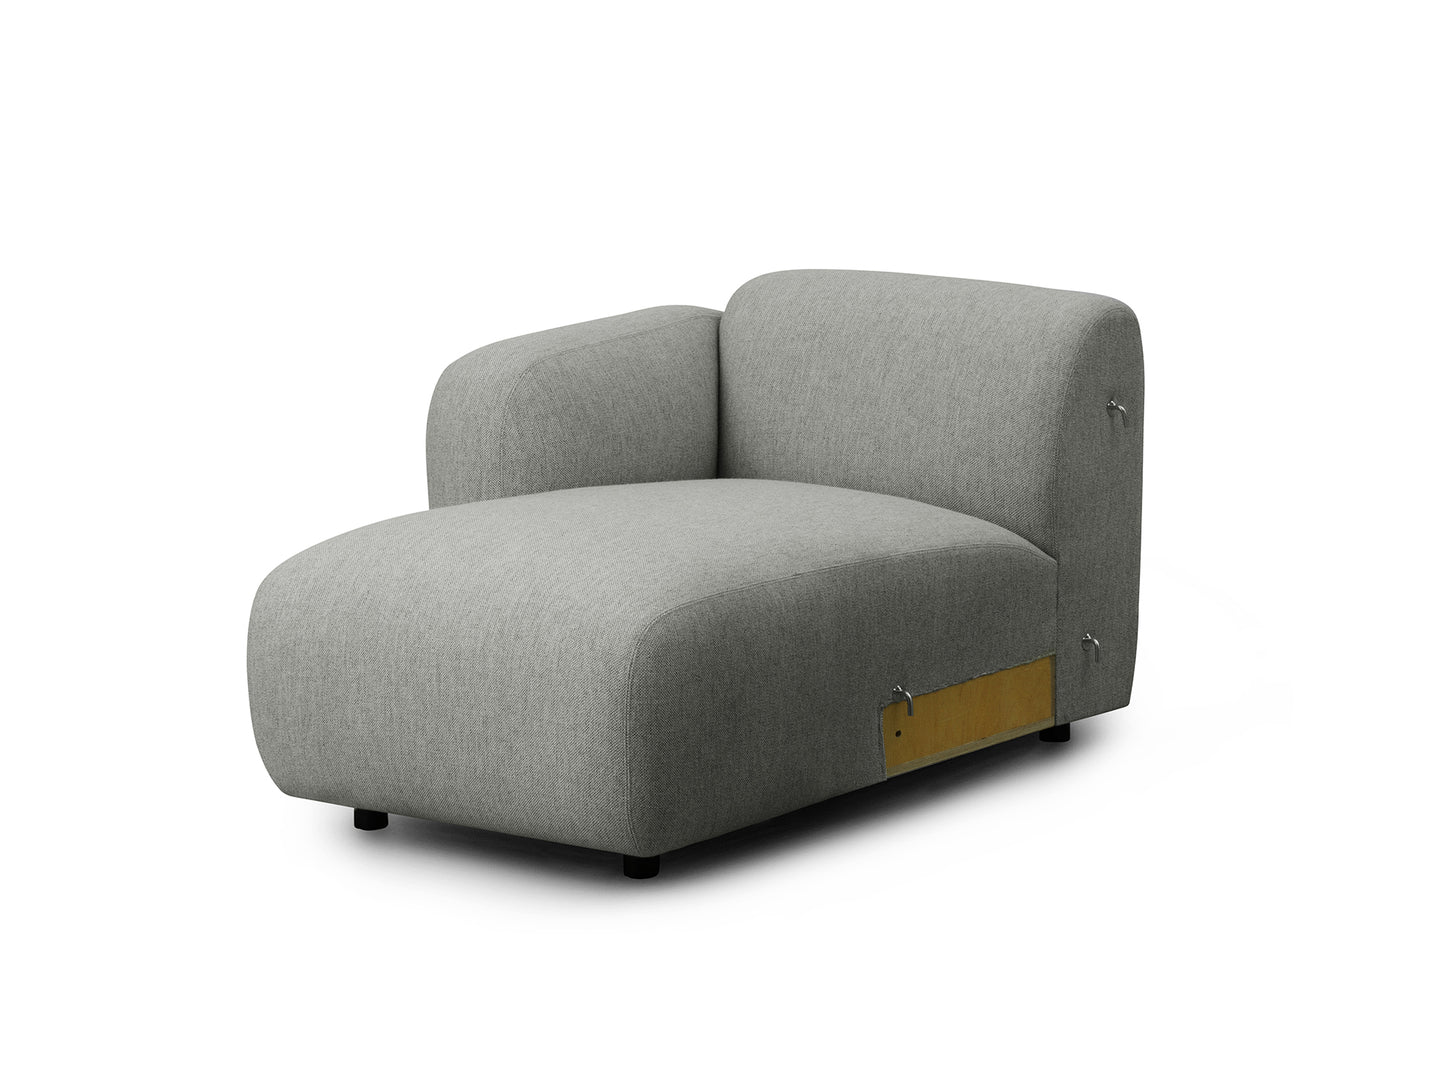 Swell Modular Sofa - Individual Modules by Normann Copenhagen - Left Chaise Longue Module 400 (Sitting Right)